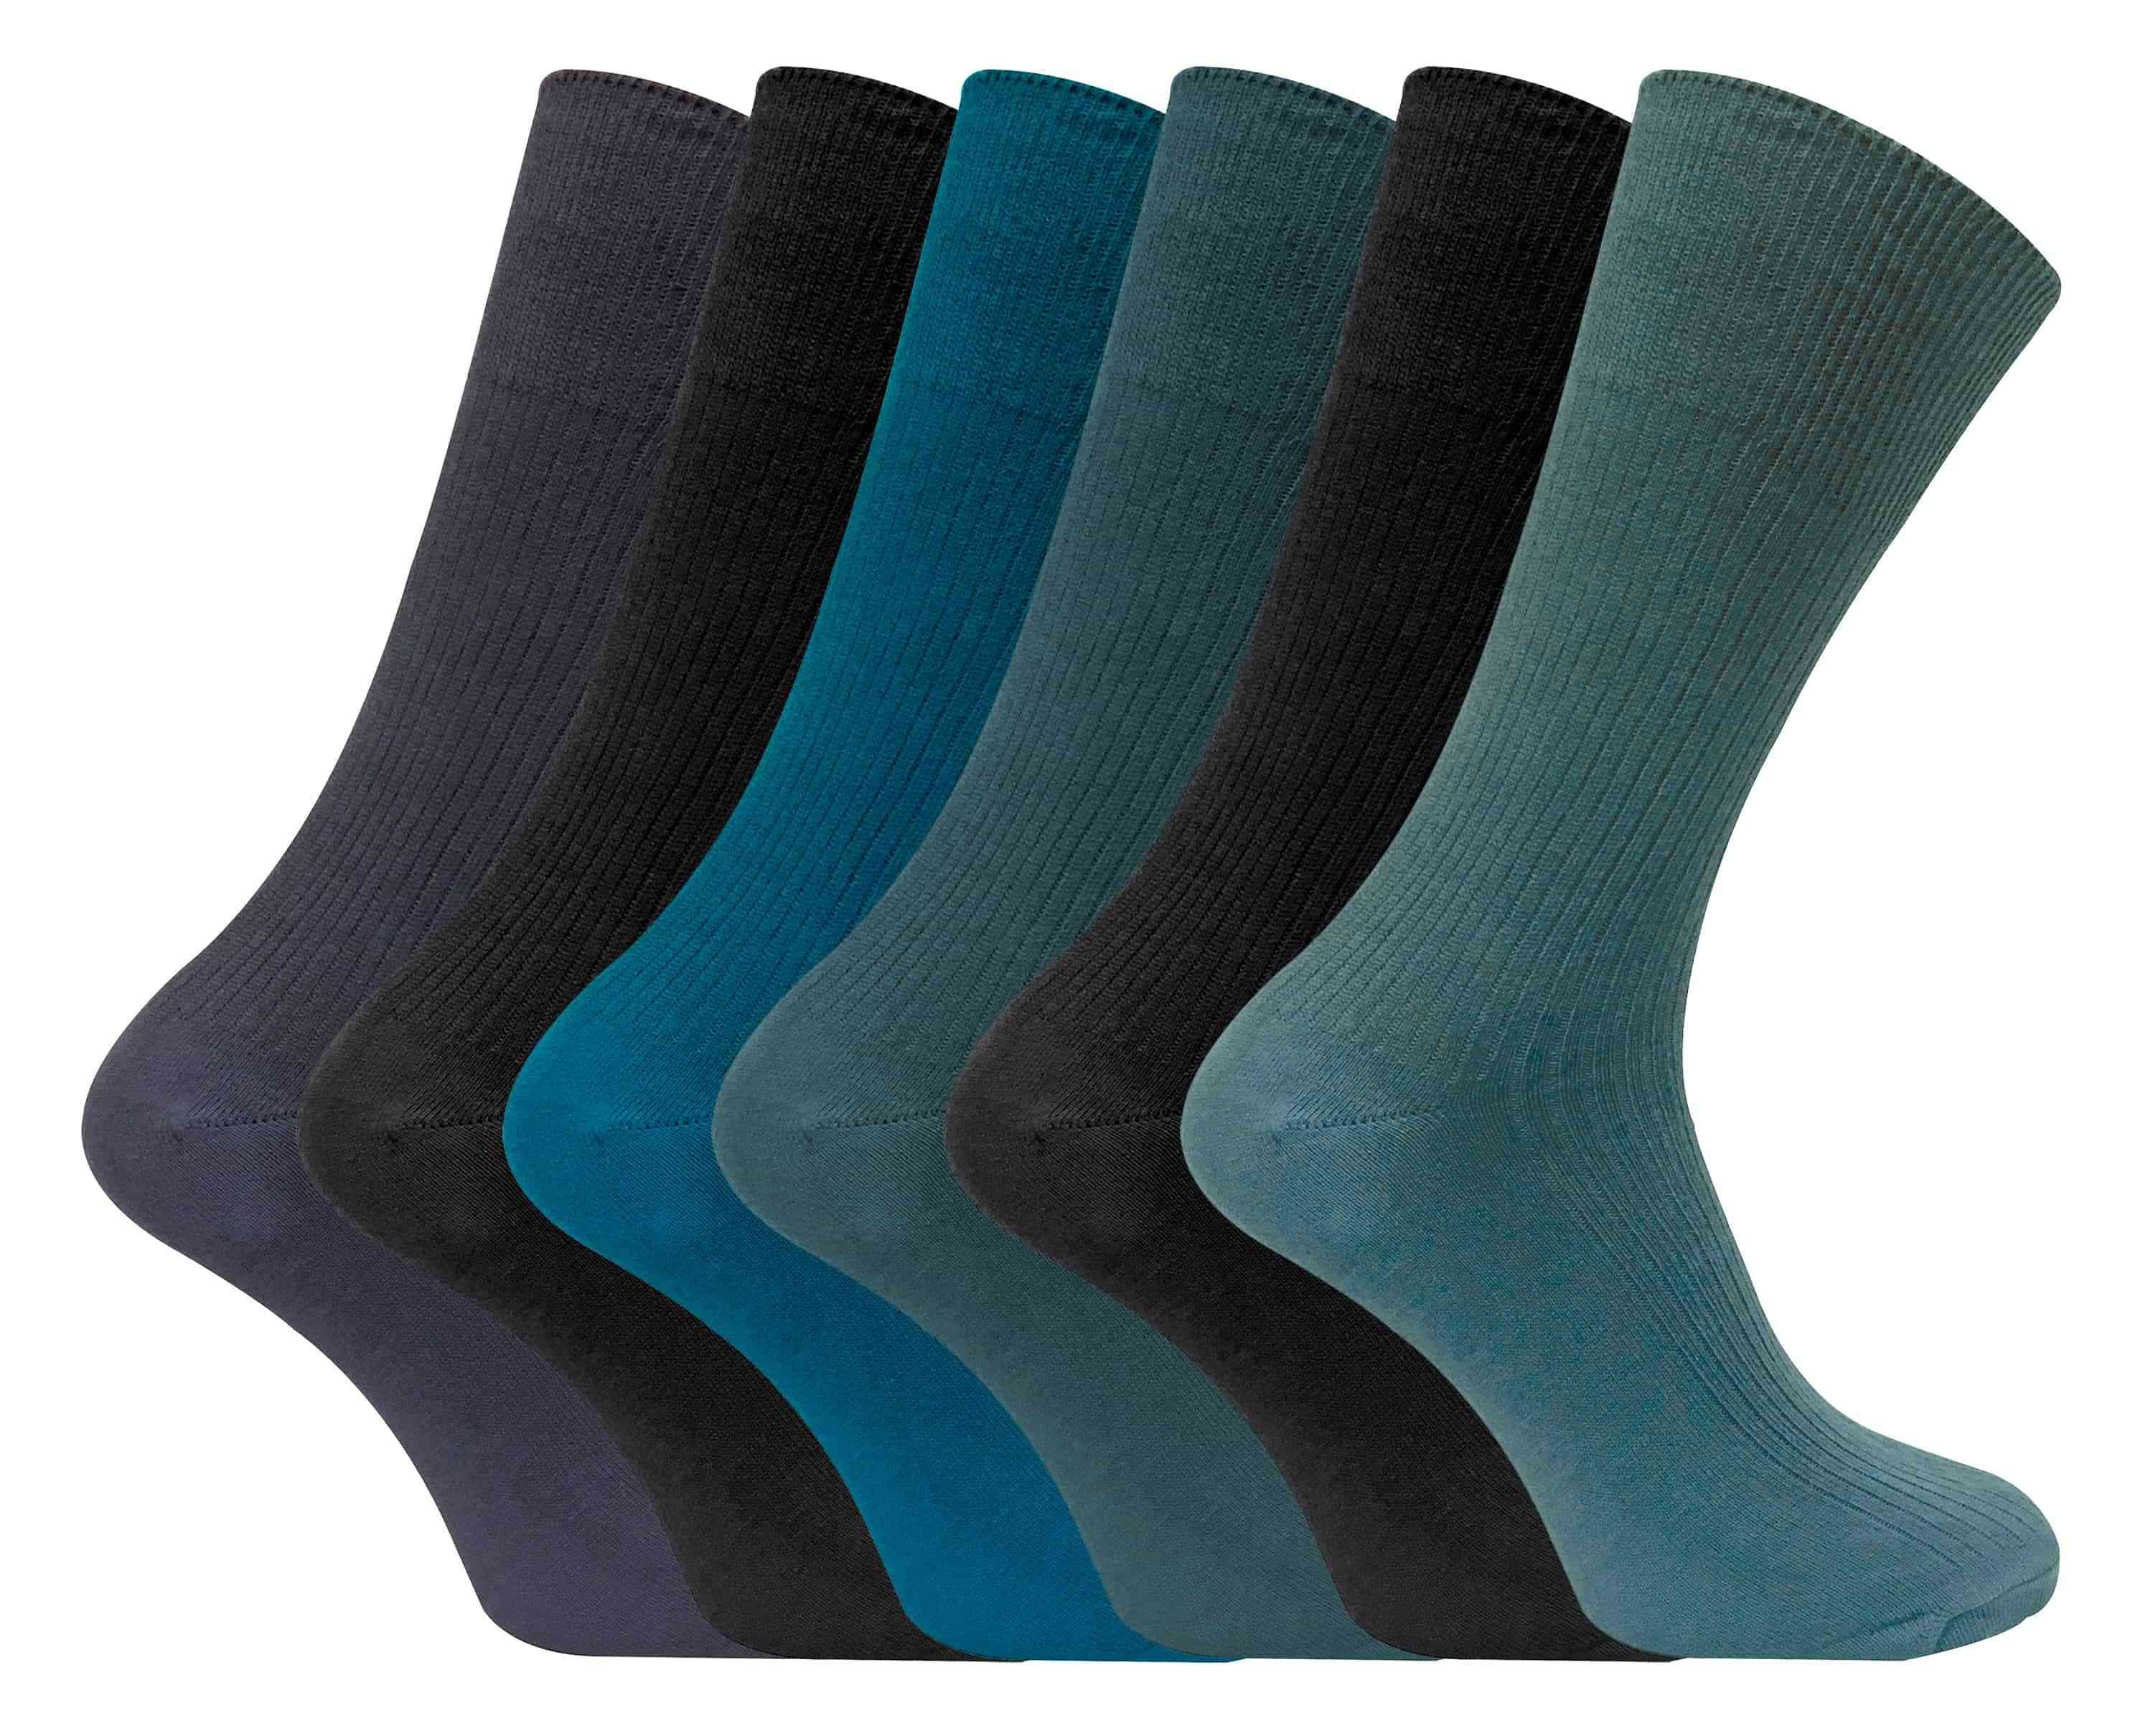 Men's Non Elastic 100% Cotton Socks